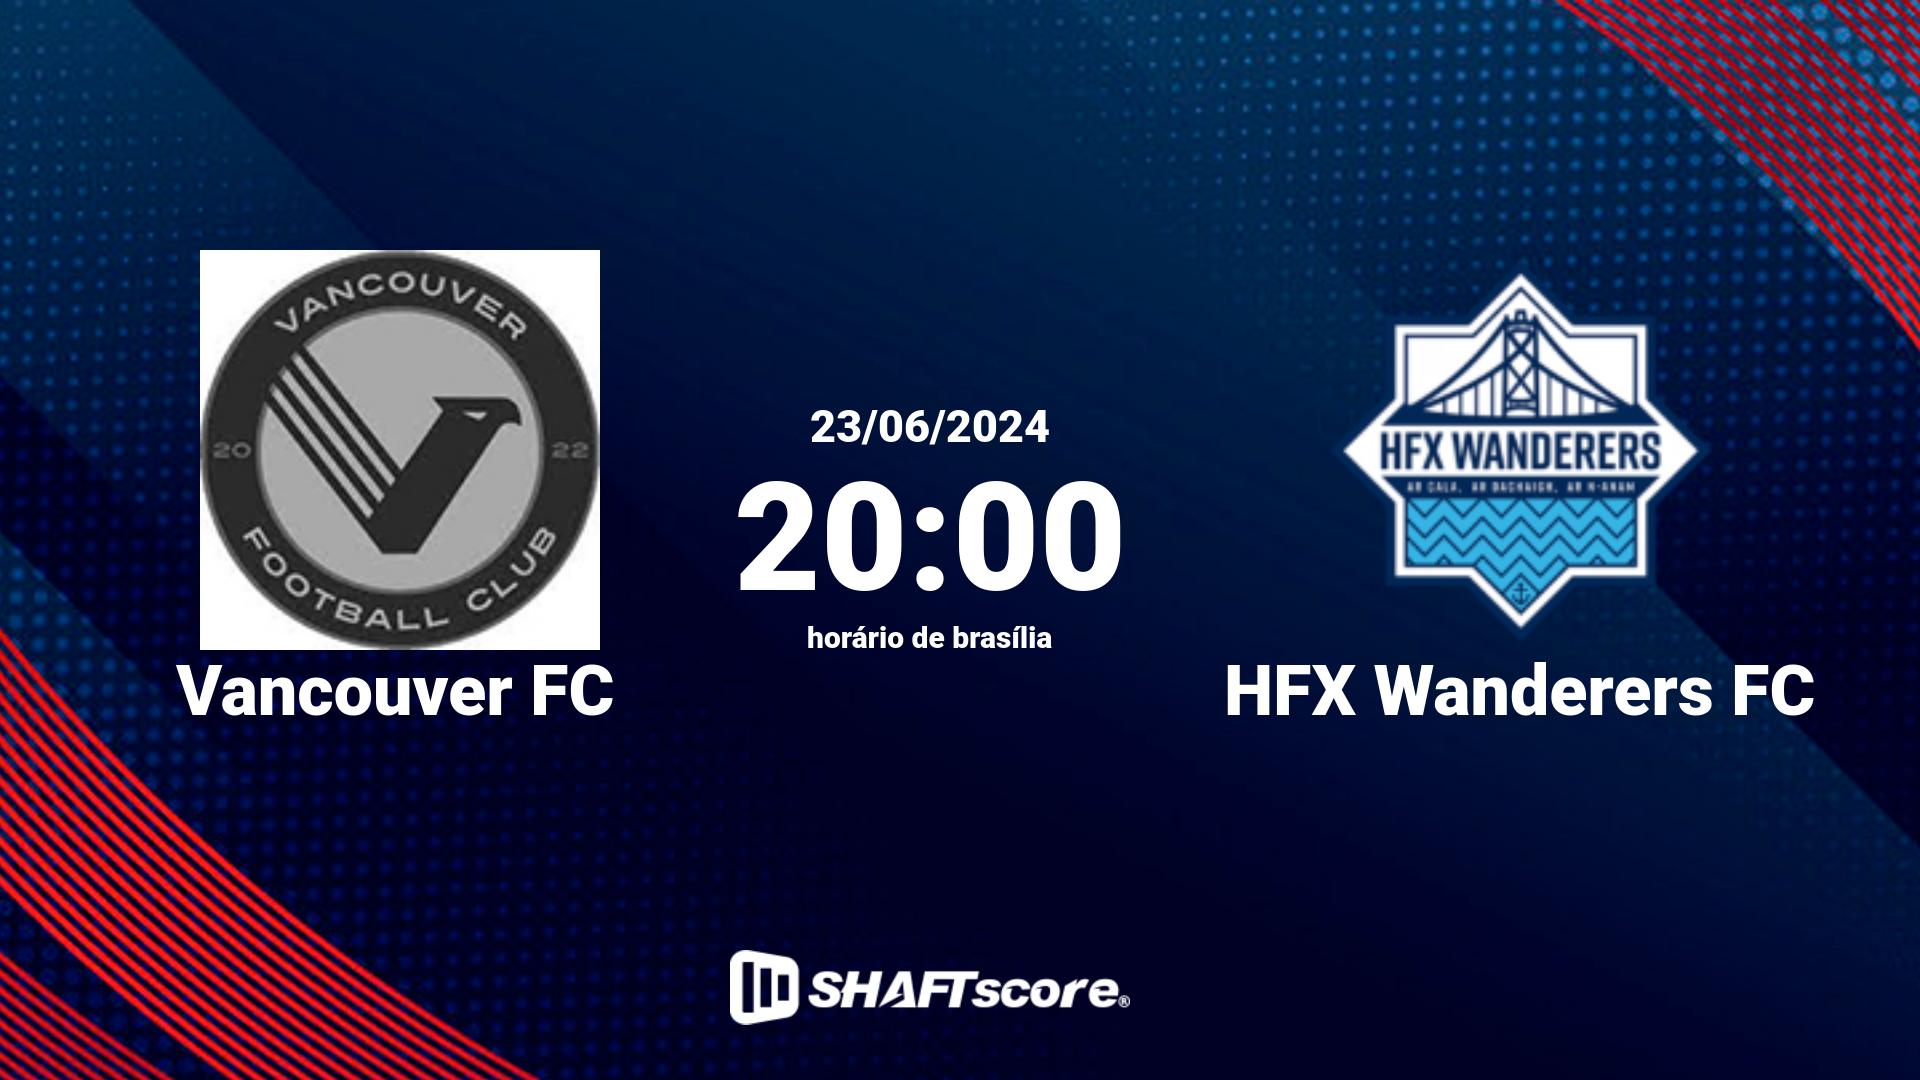 Estatísticas do jogo Vancouver FC vs HFX Wanderers FC 23.06 20:00